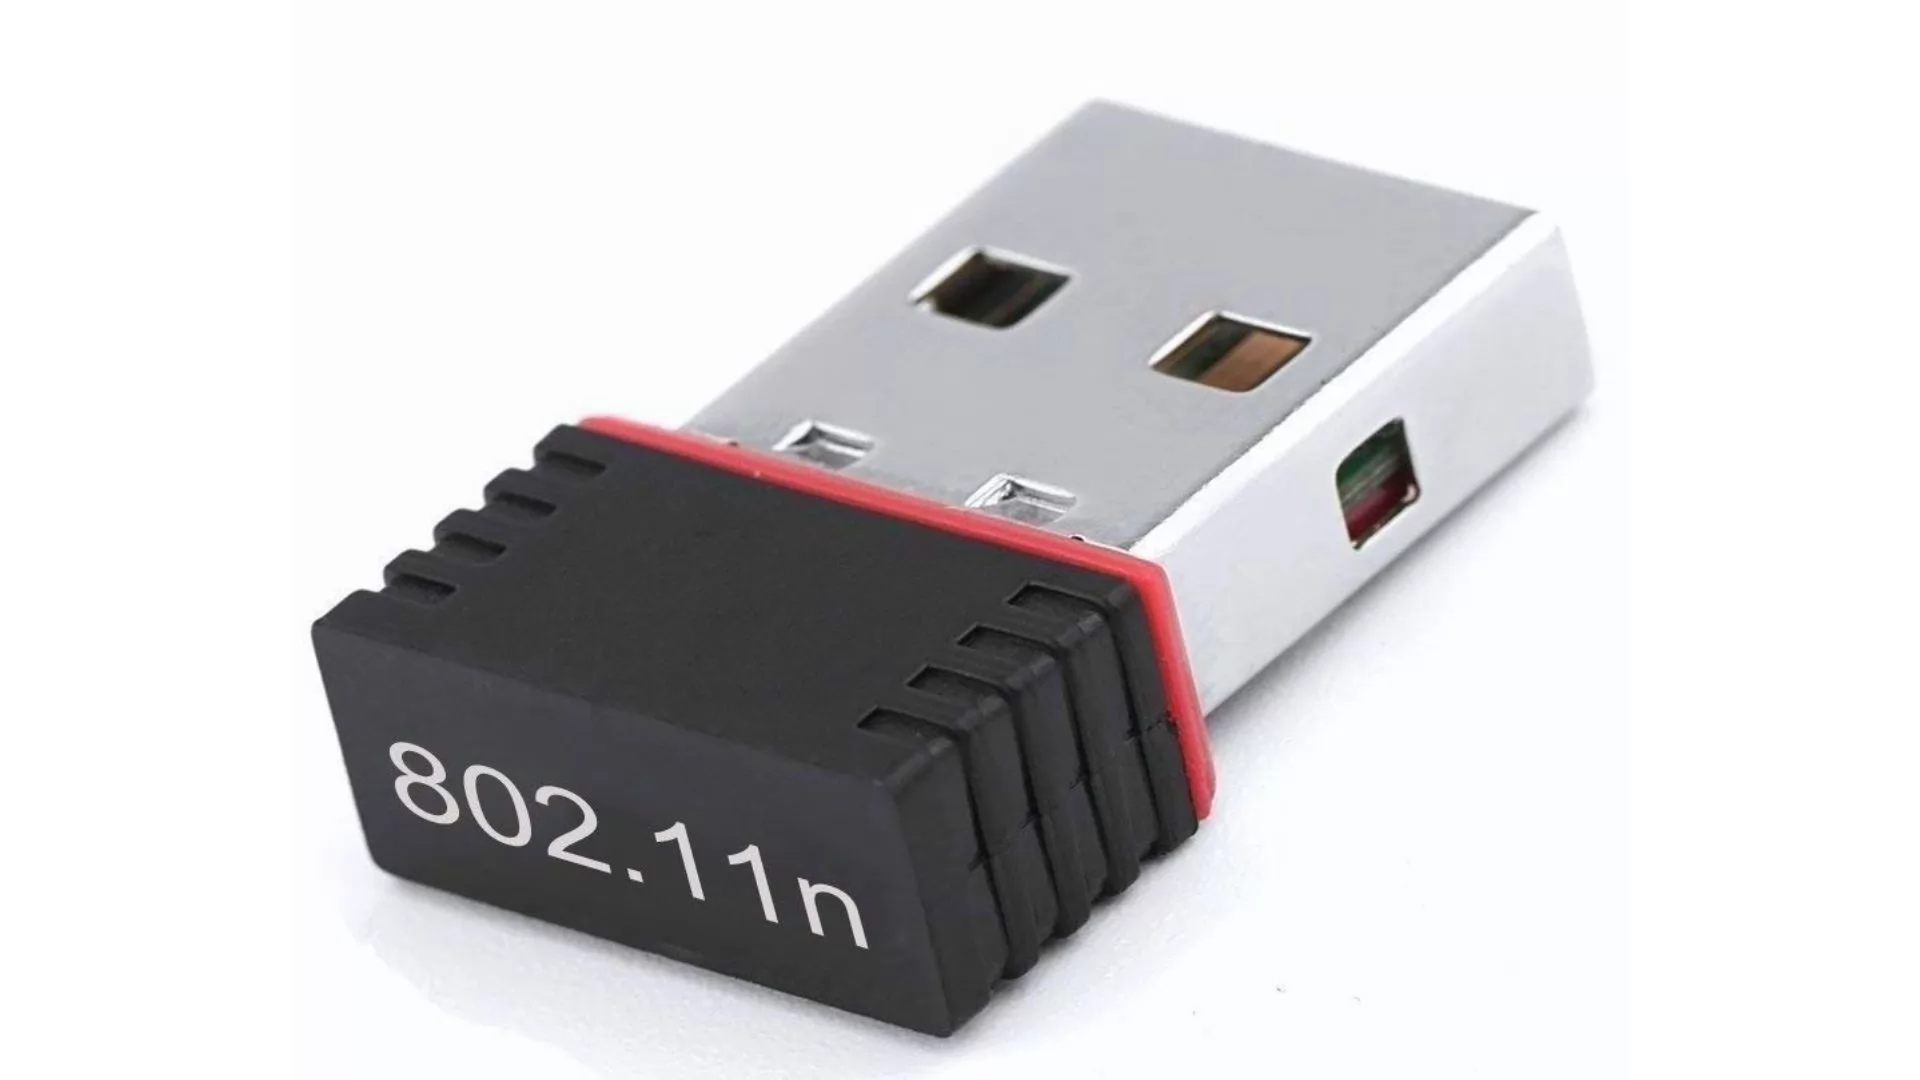  Inteha 1000 Mbps Mini Wireless USB wifi Receiver Adapter Dongle